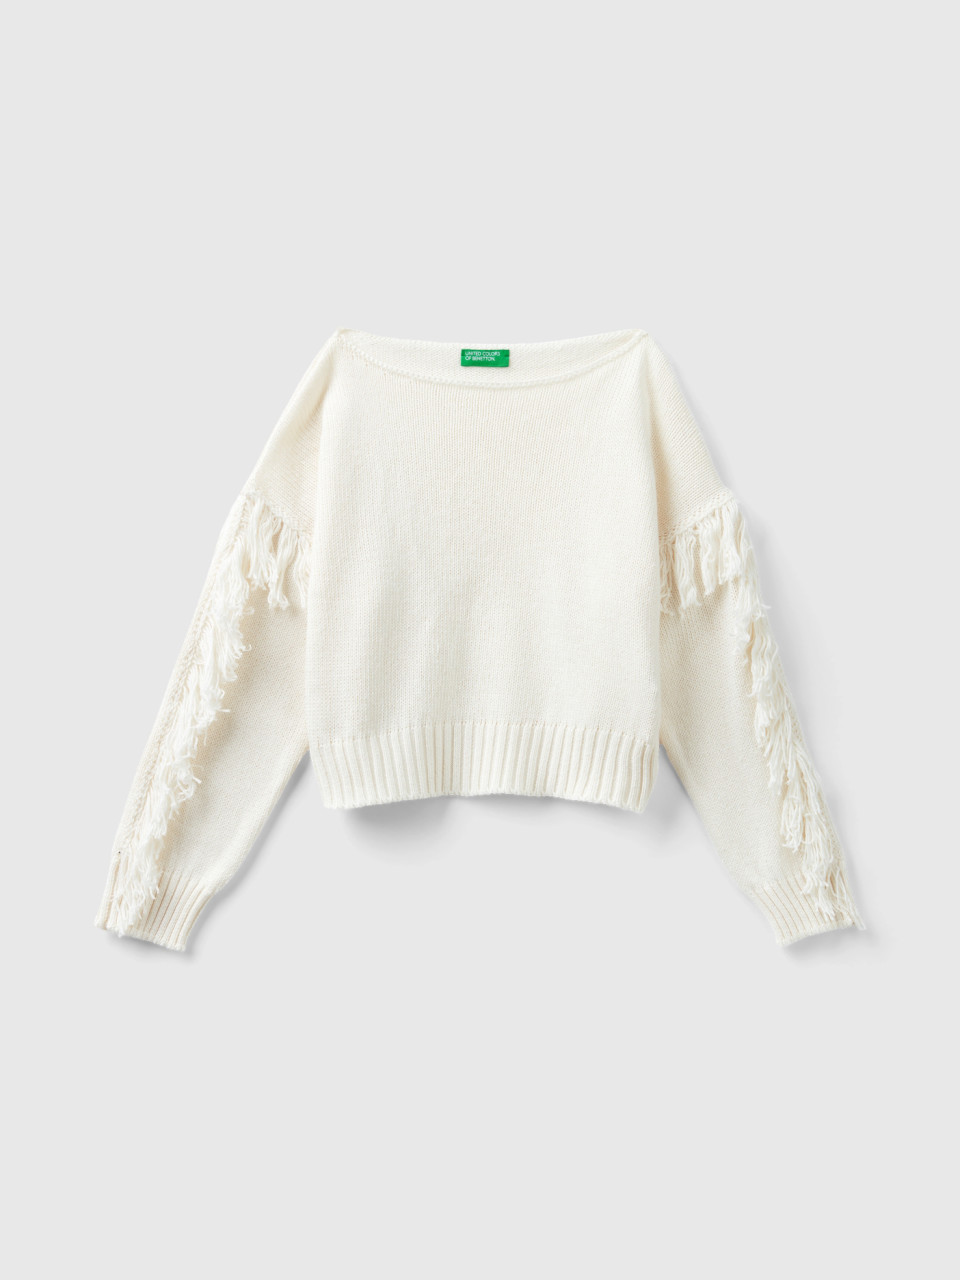 Benetton, Sweater With Fringe, Creamy White, Kids